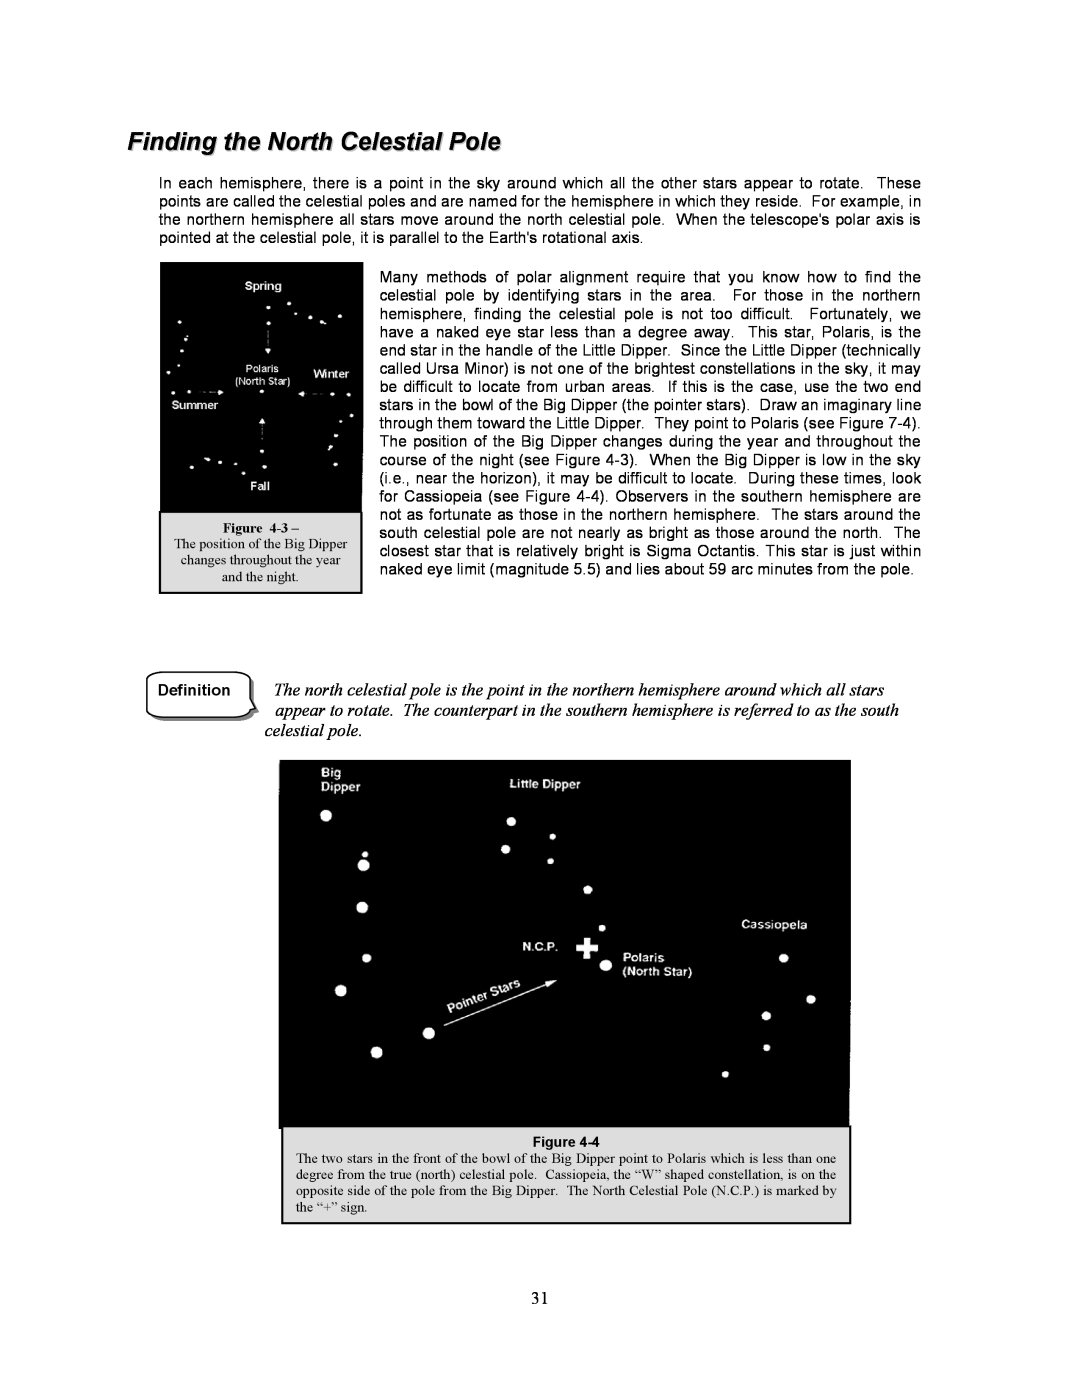 Celestron NexStar 8i manual Finding the North Celestial Pole, celestial pole 